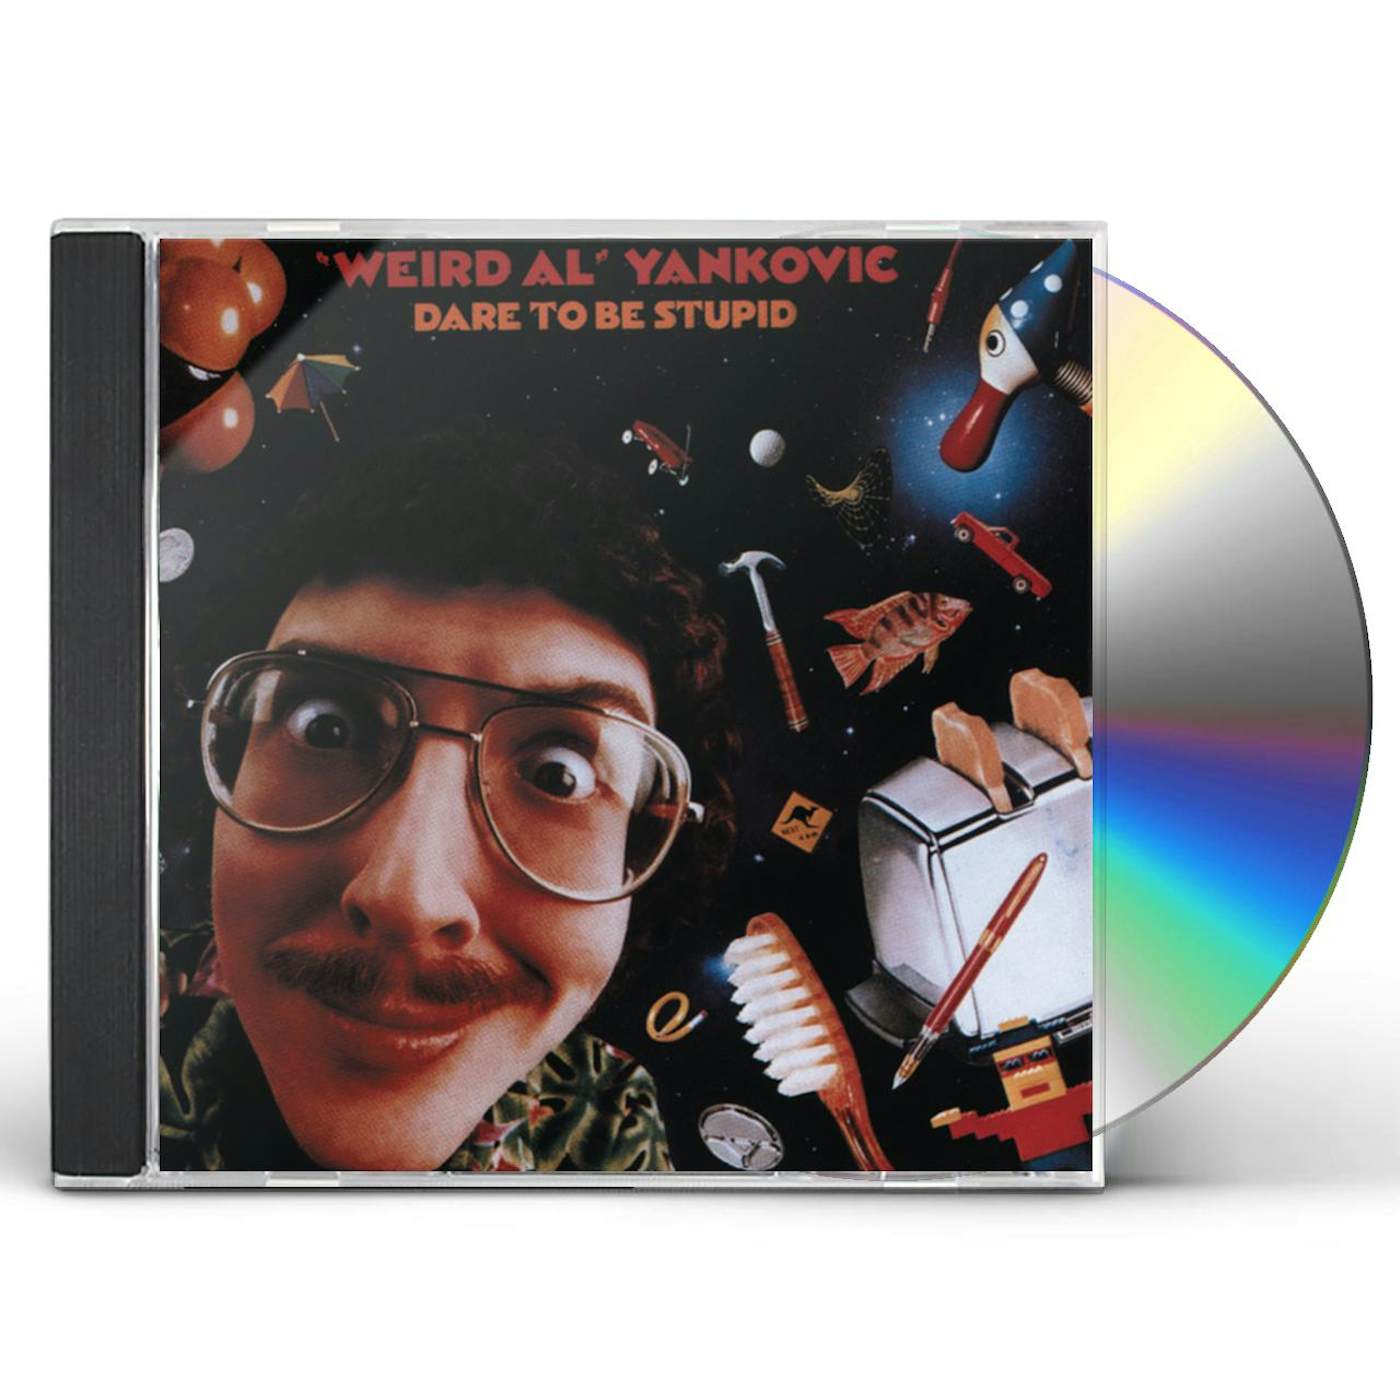 "Weird Al" Yankovic DARE TO BE STUPID CD